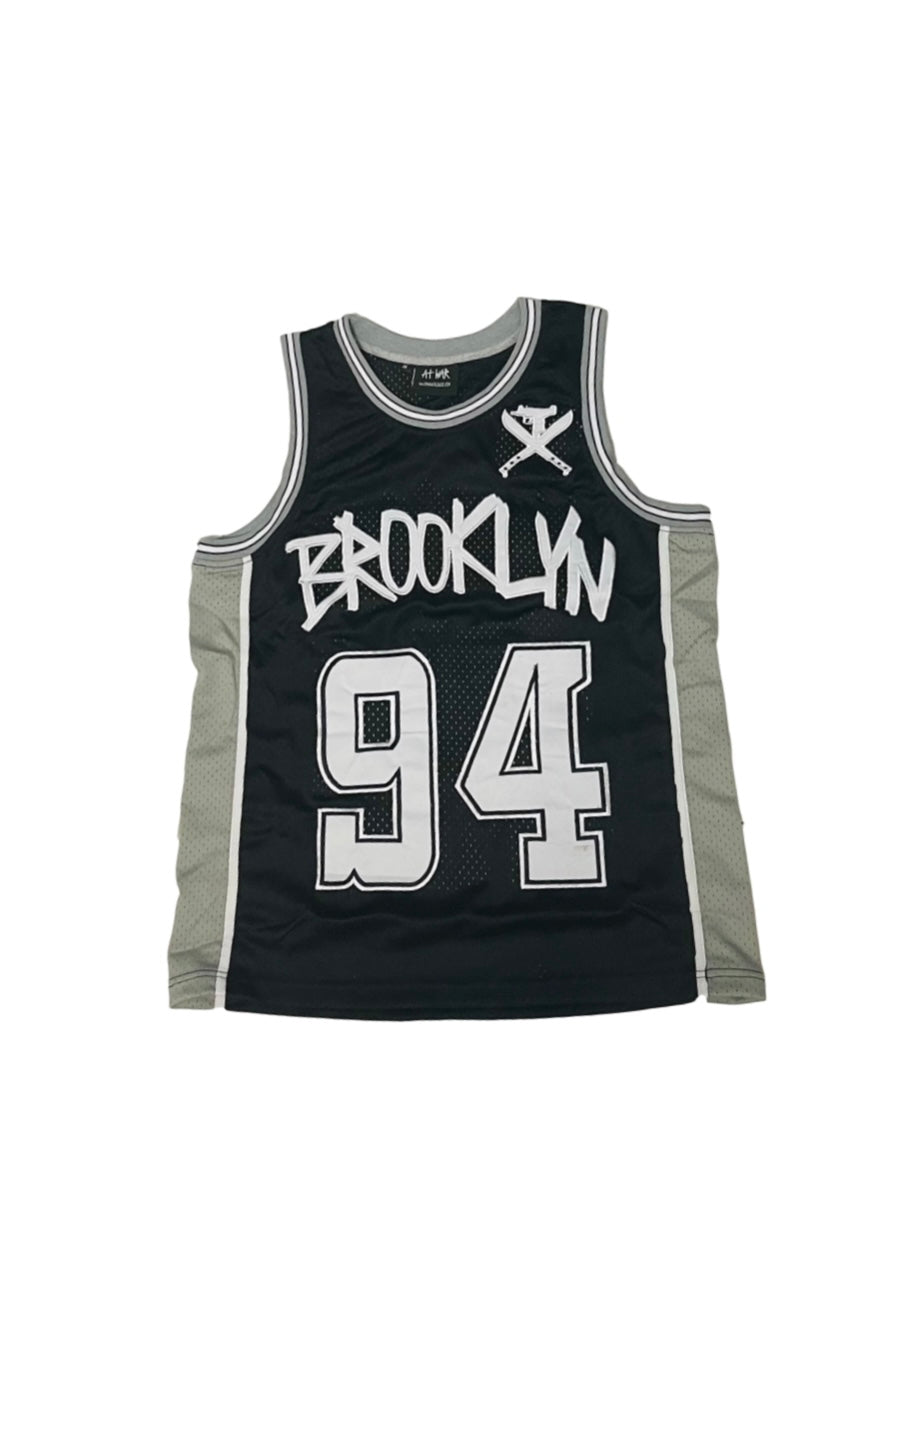 Brooklyn Basketball Jersey